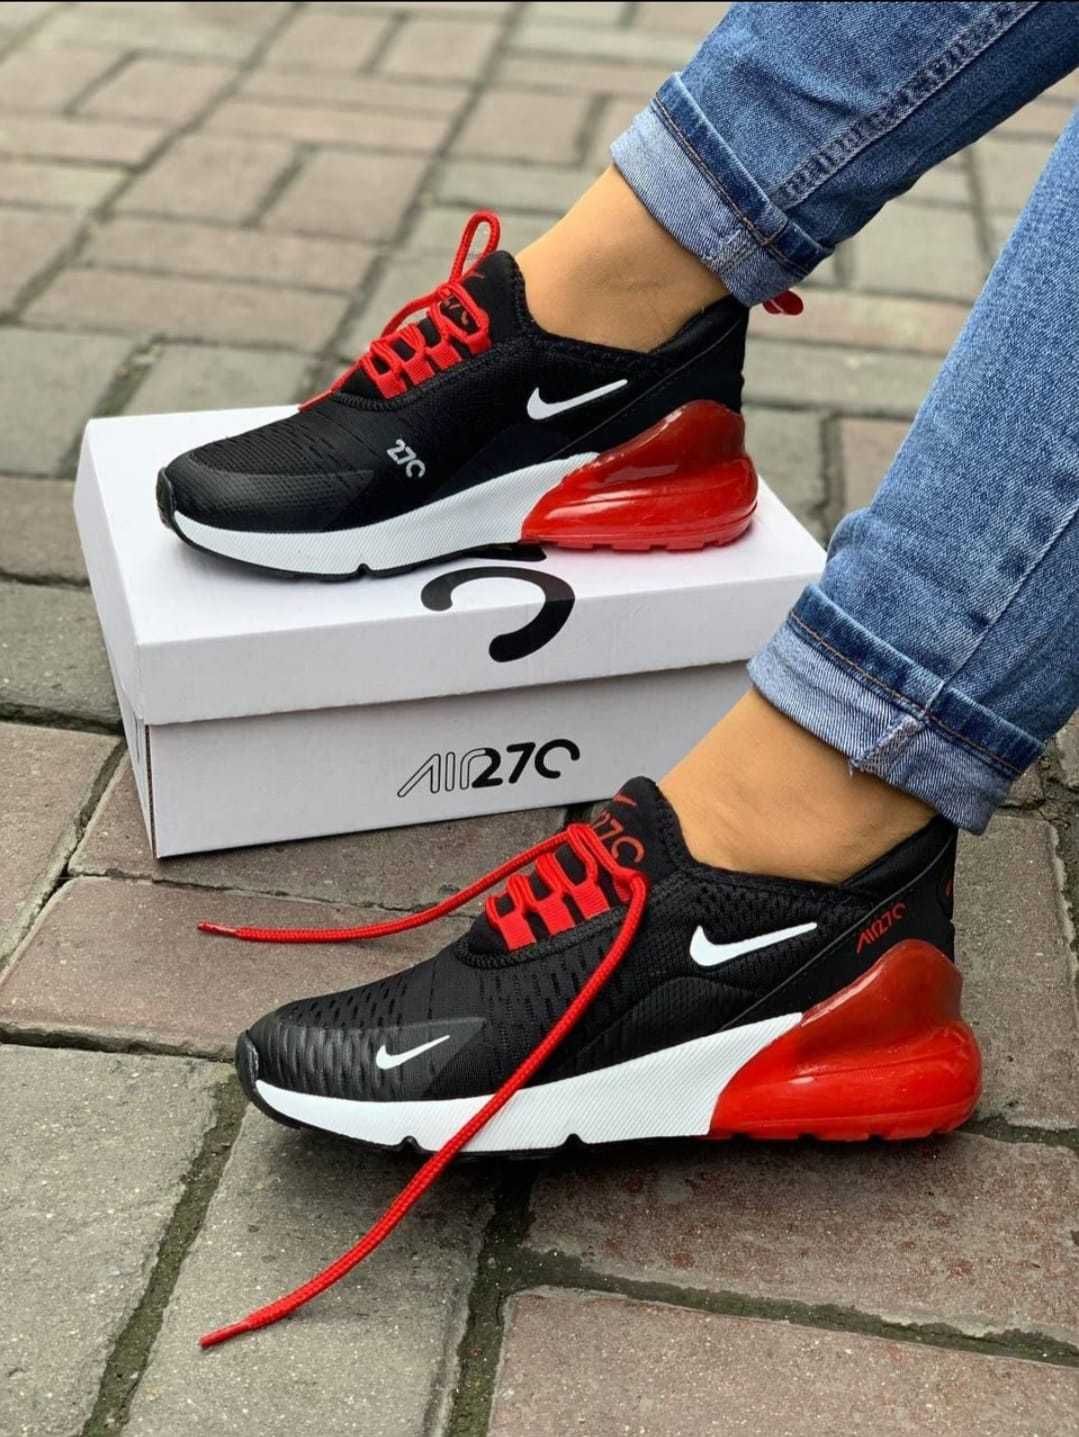 Adidasi Nike 270c Negru Cu Semn Alb